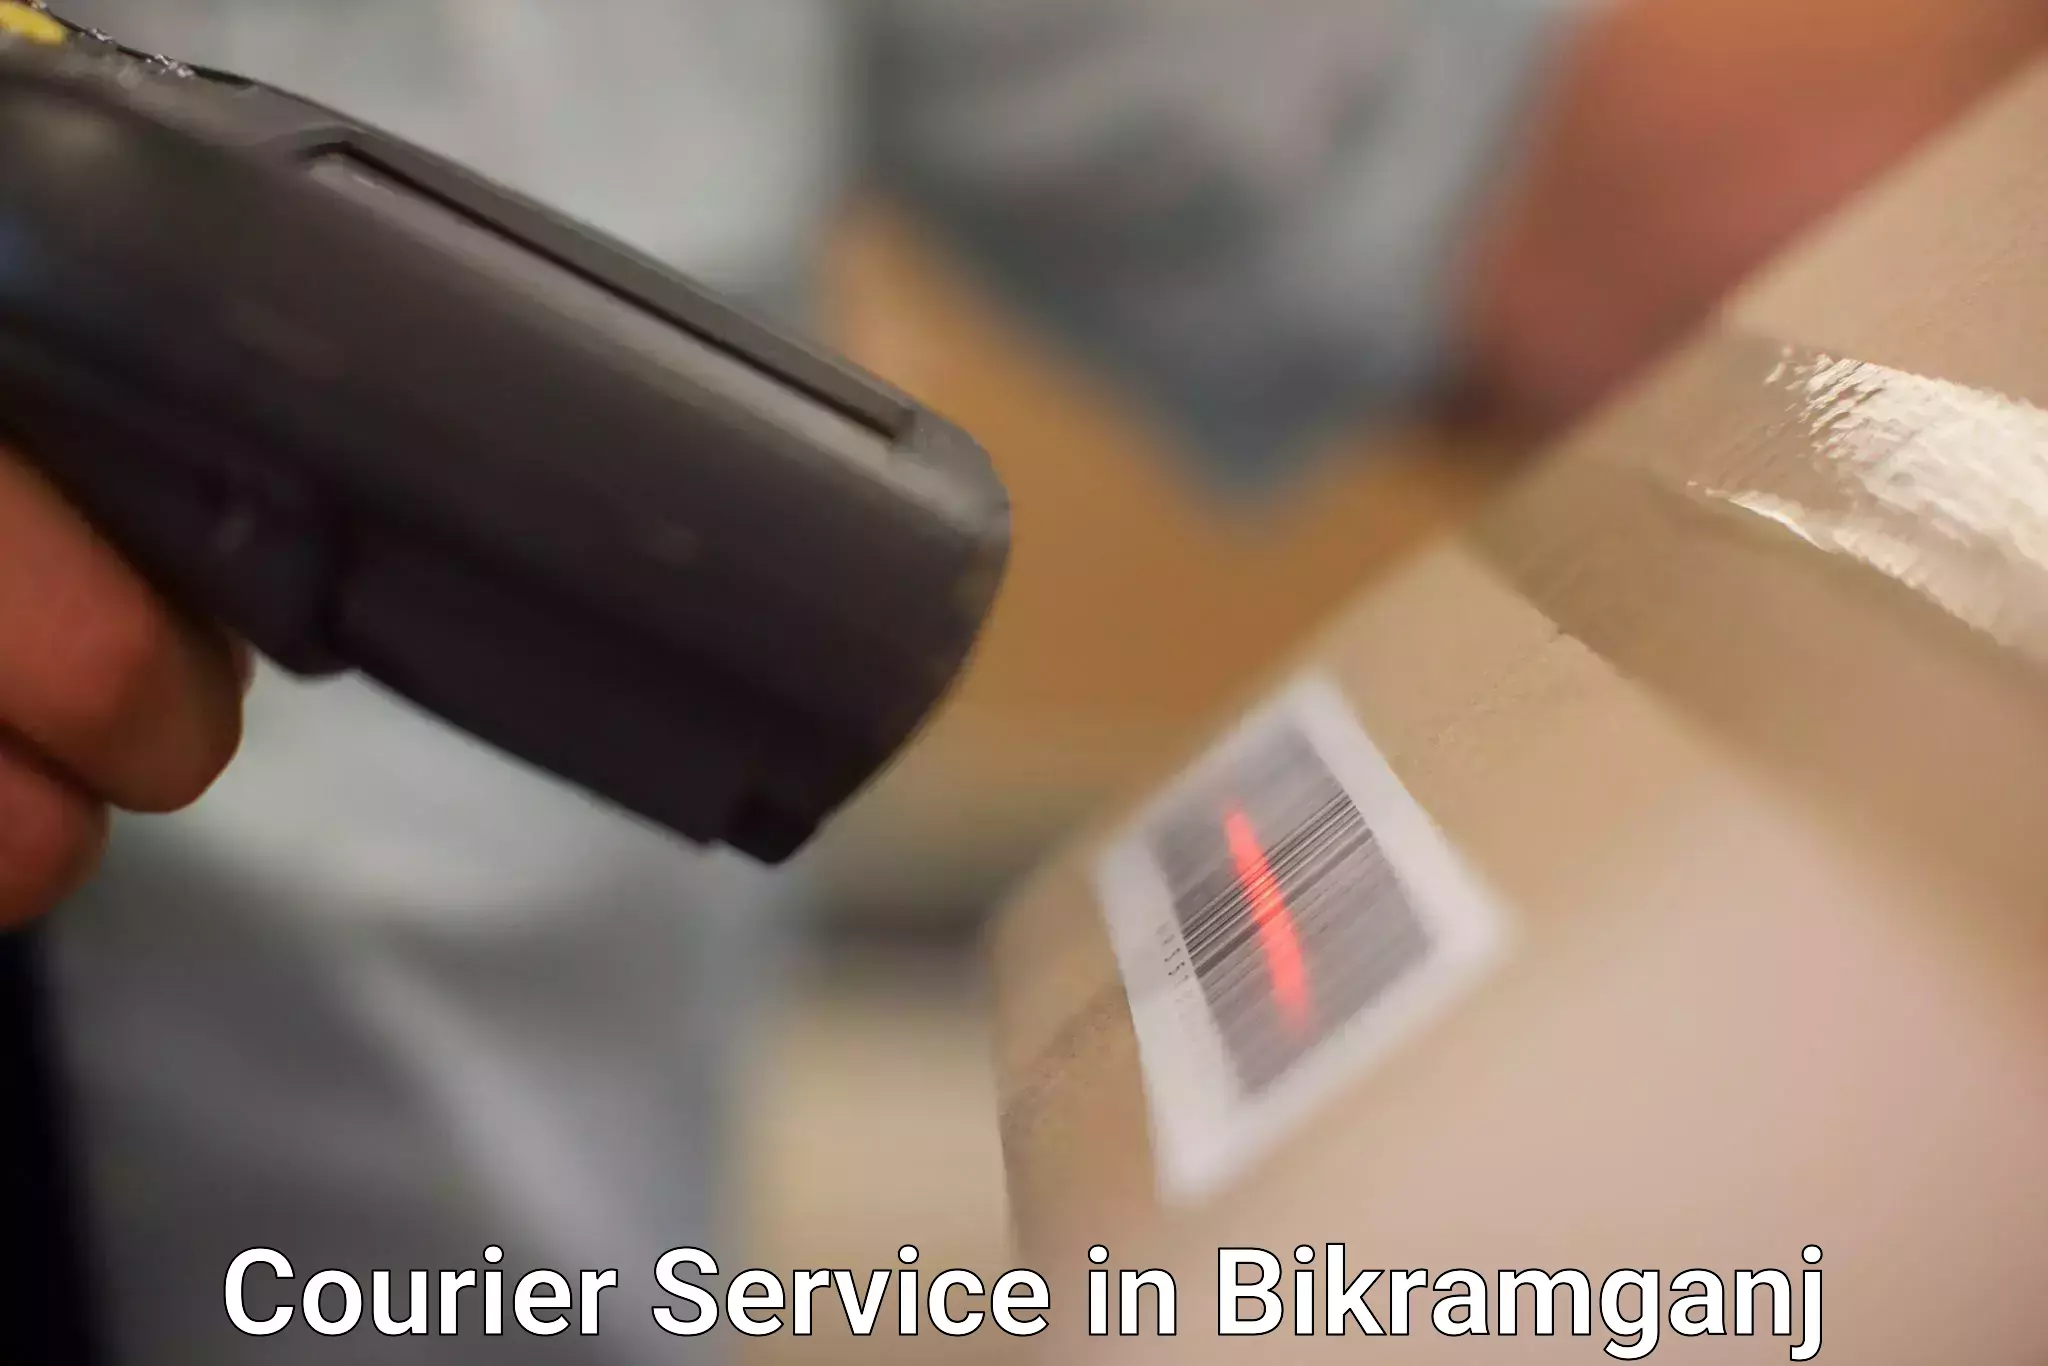 Supply chain efficiency in Bikramganj